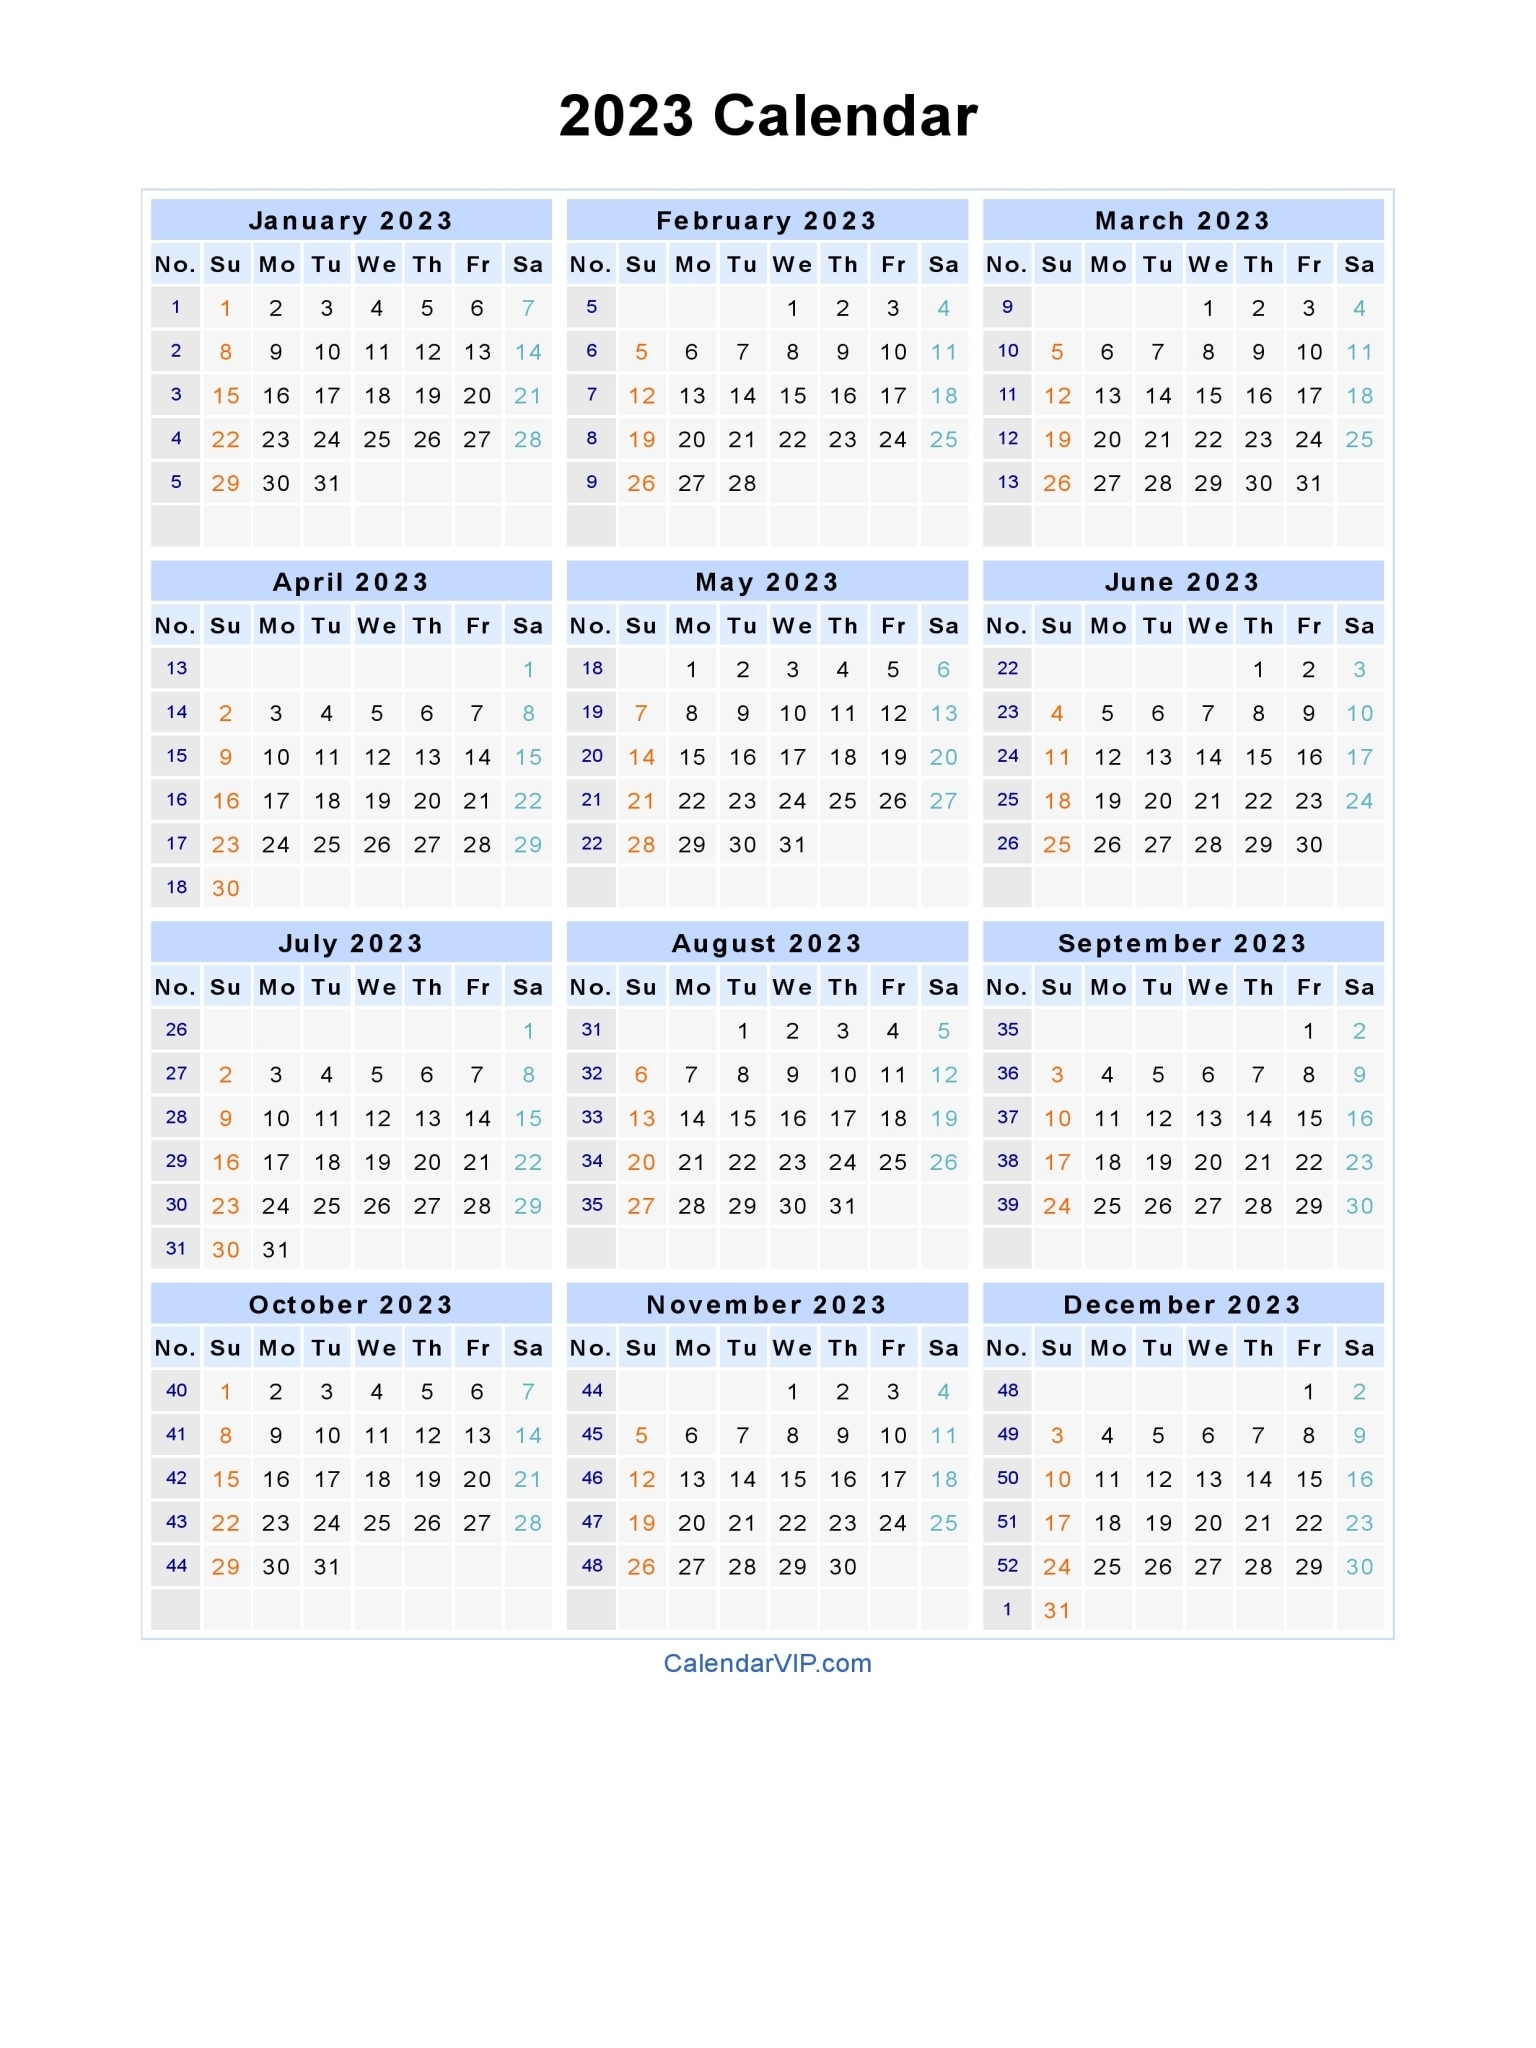 3 Year Calendar 2021 To 2023 | Calendar Printables Free Blank